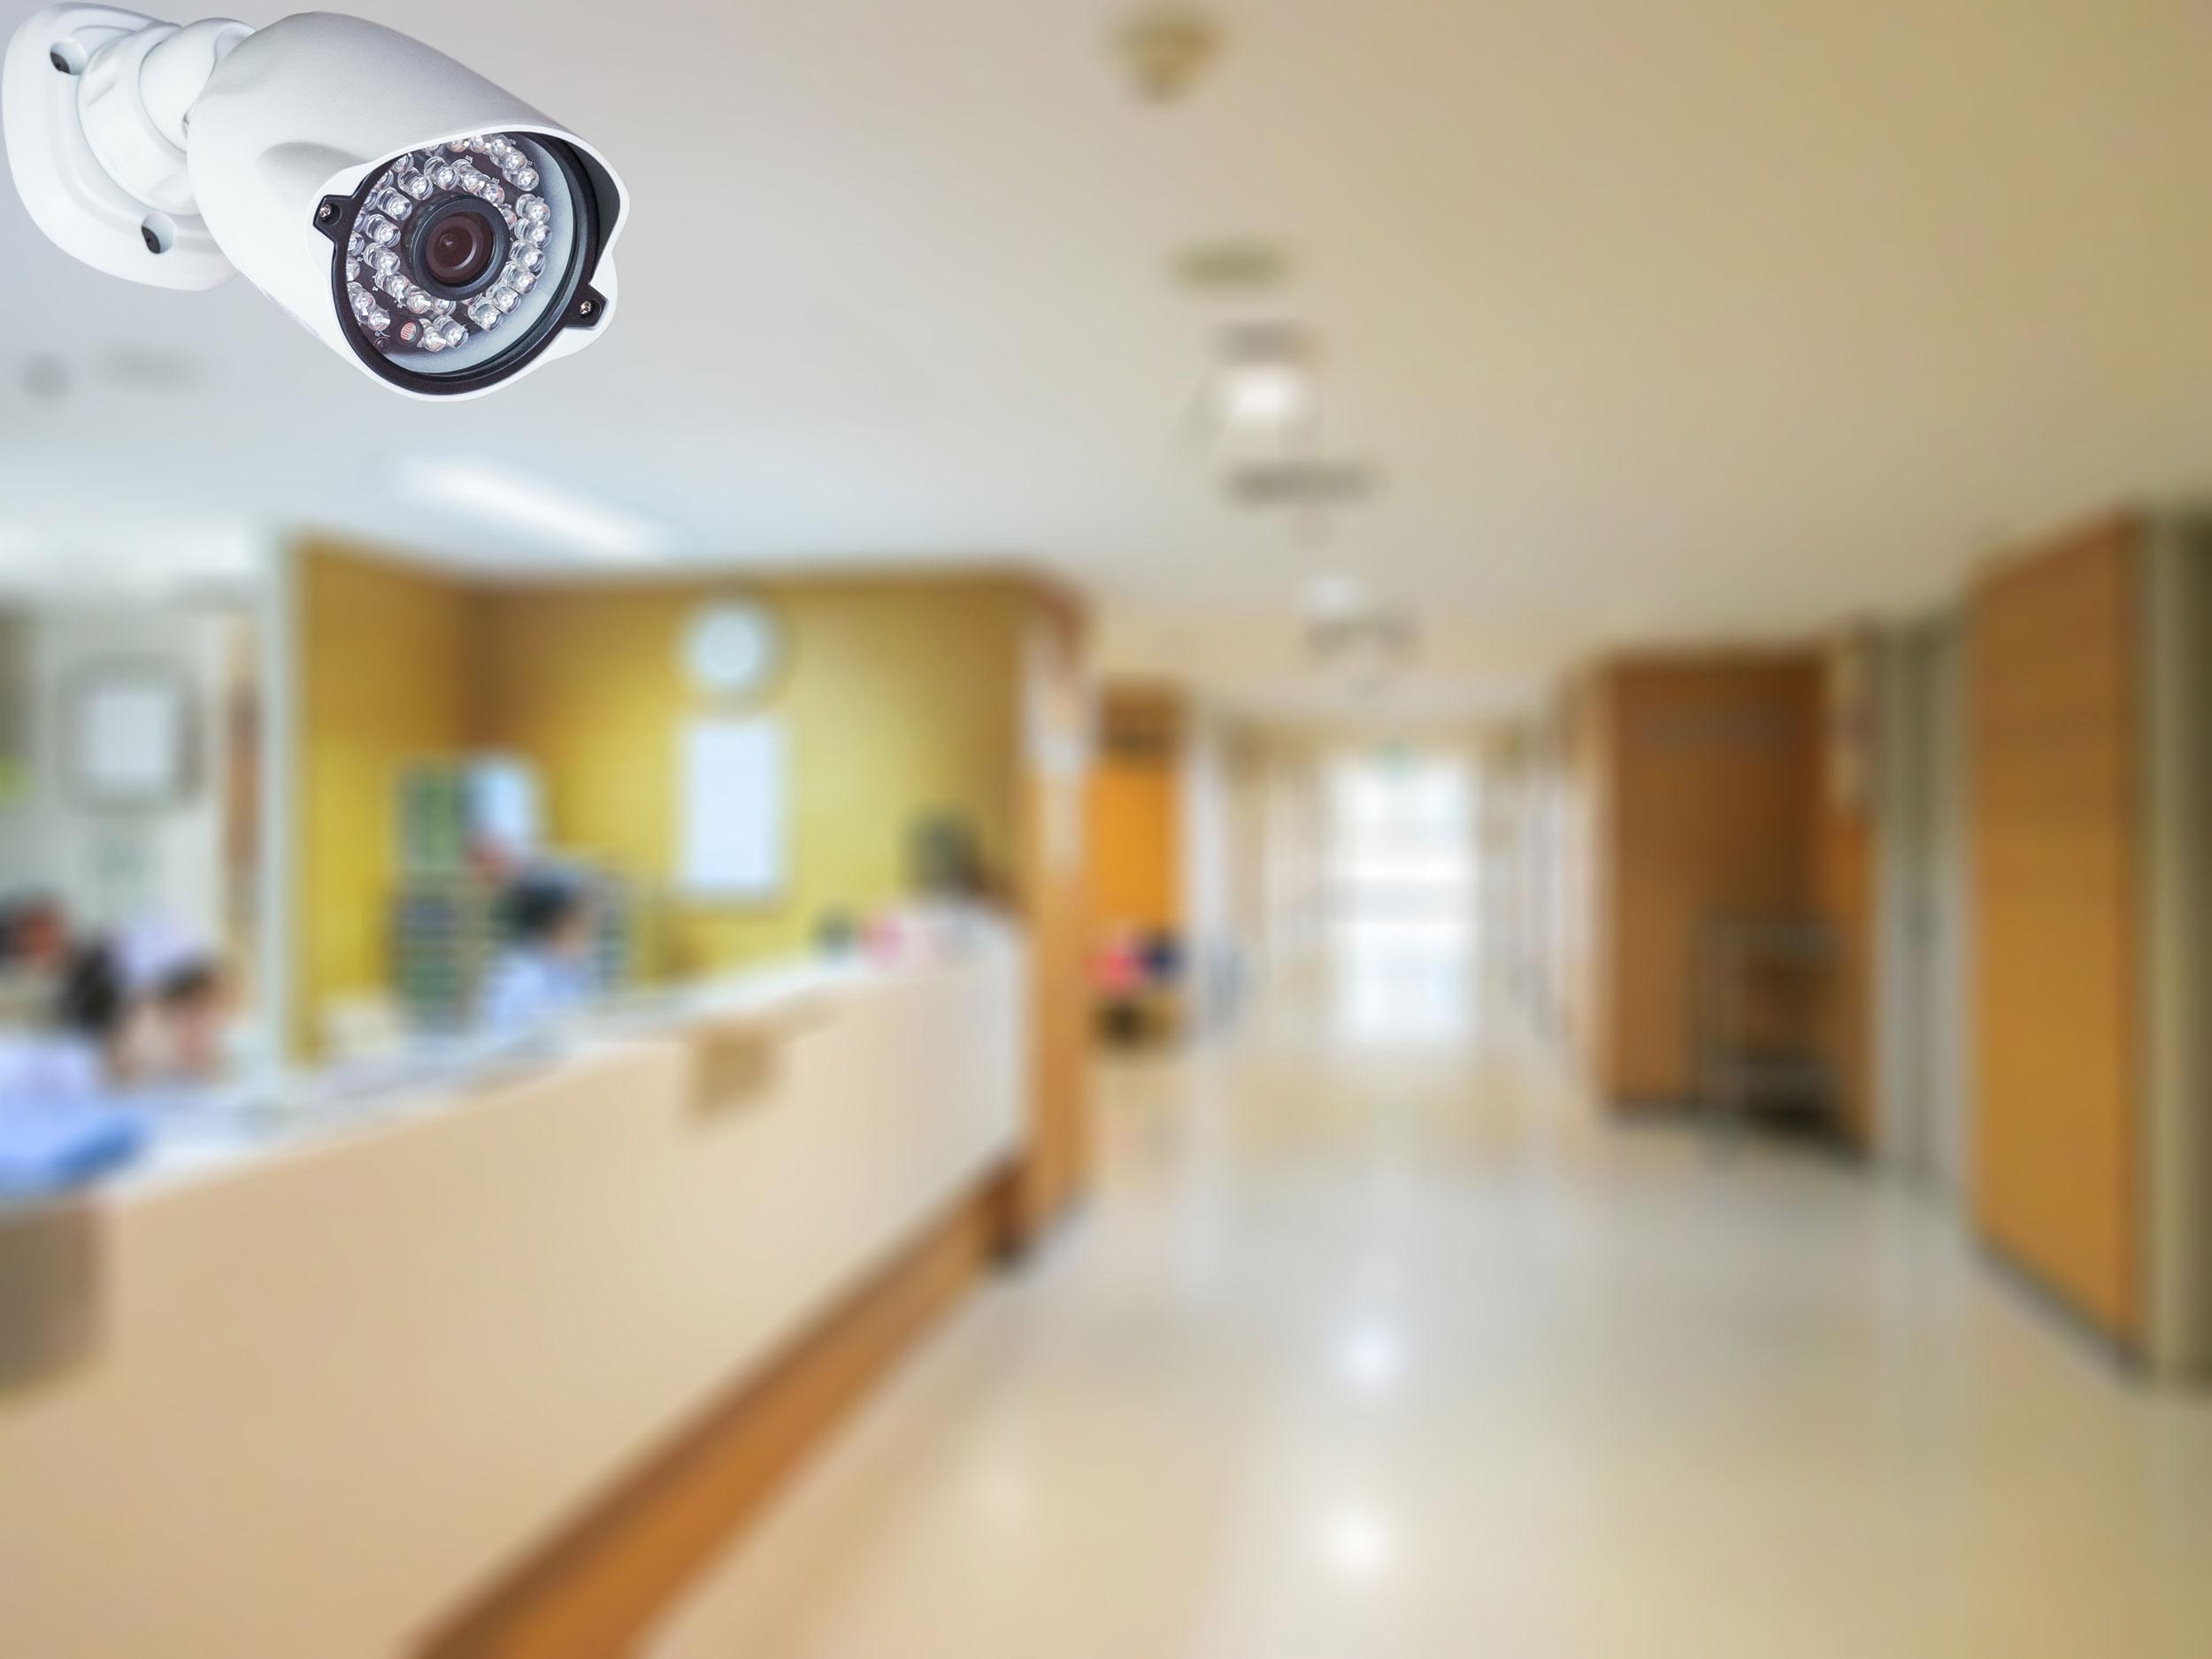 West Atlanta Internal Medicine Selects Comcast Smart Solutions for Cloud Video Surveillance